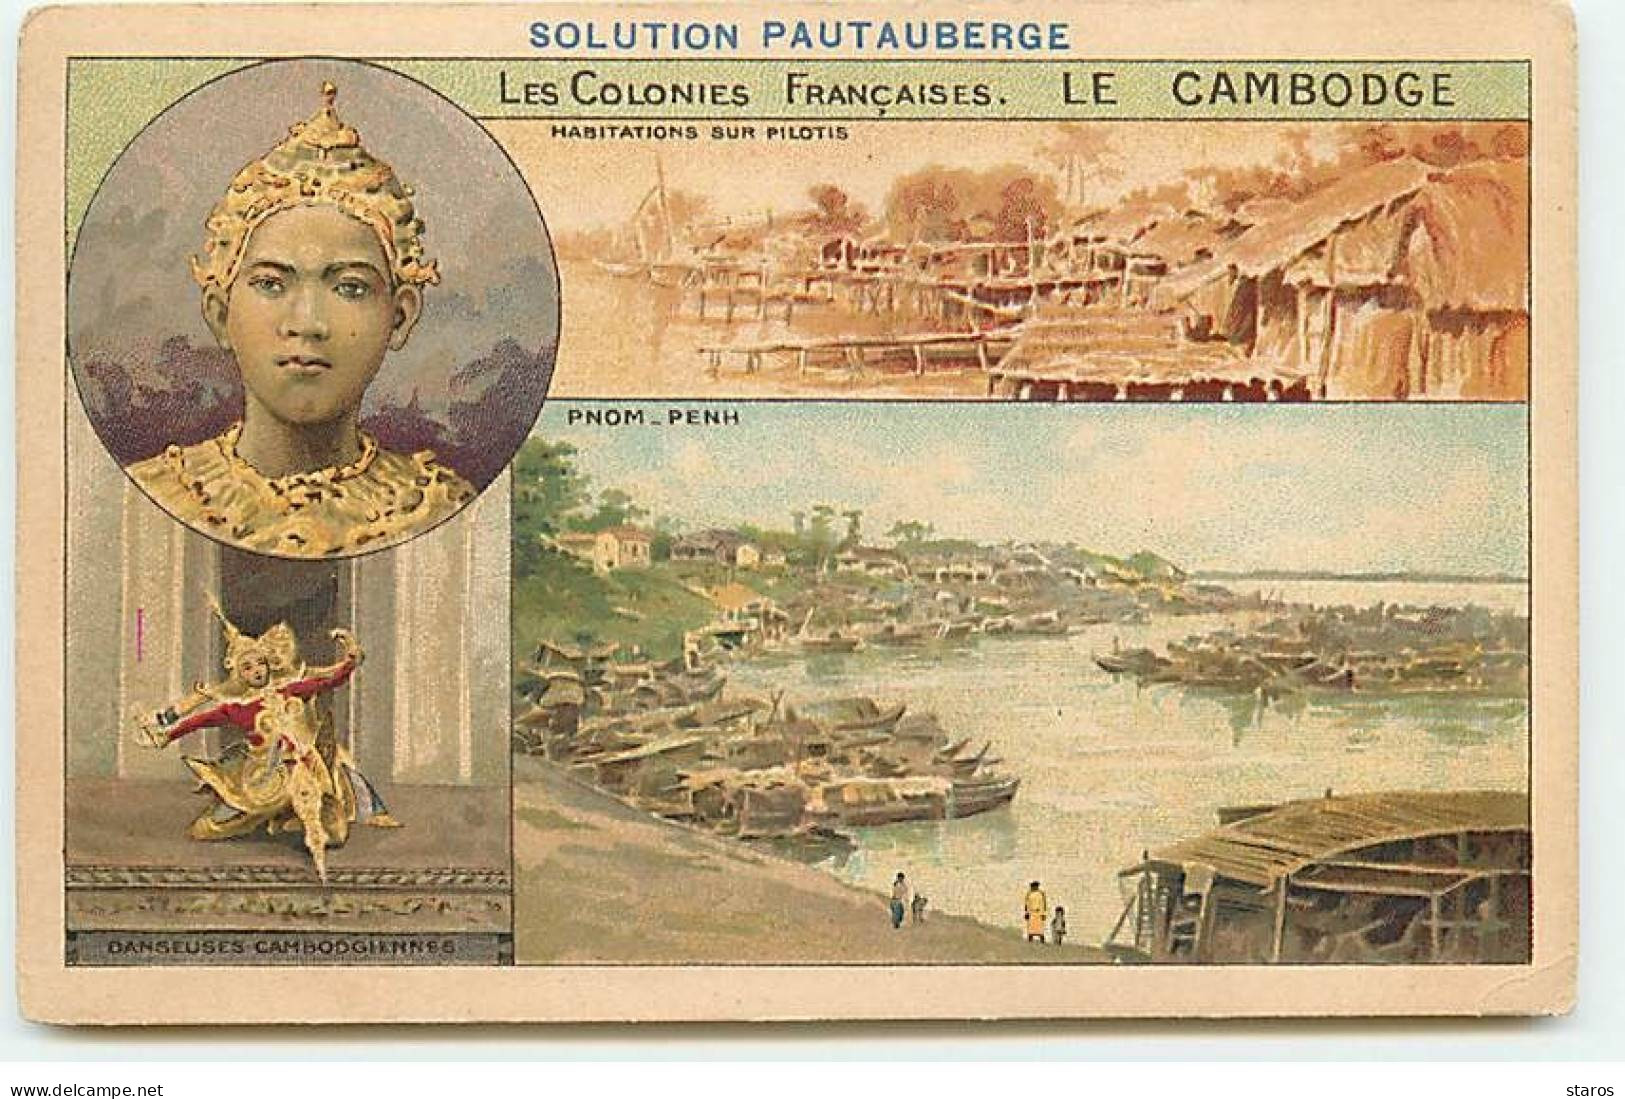 Cambodge - PNOM-PENH - Solution Pautauberge - Les Colonies Françaises - Habitations Sur Pilotis, Danseuses - Cambodge